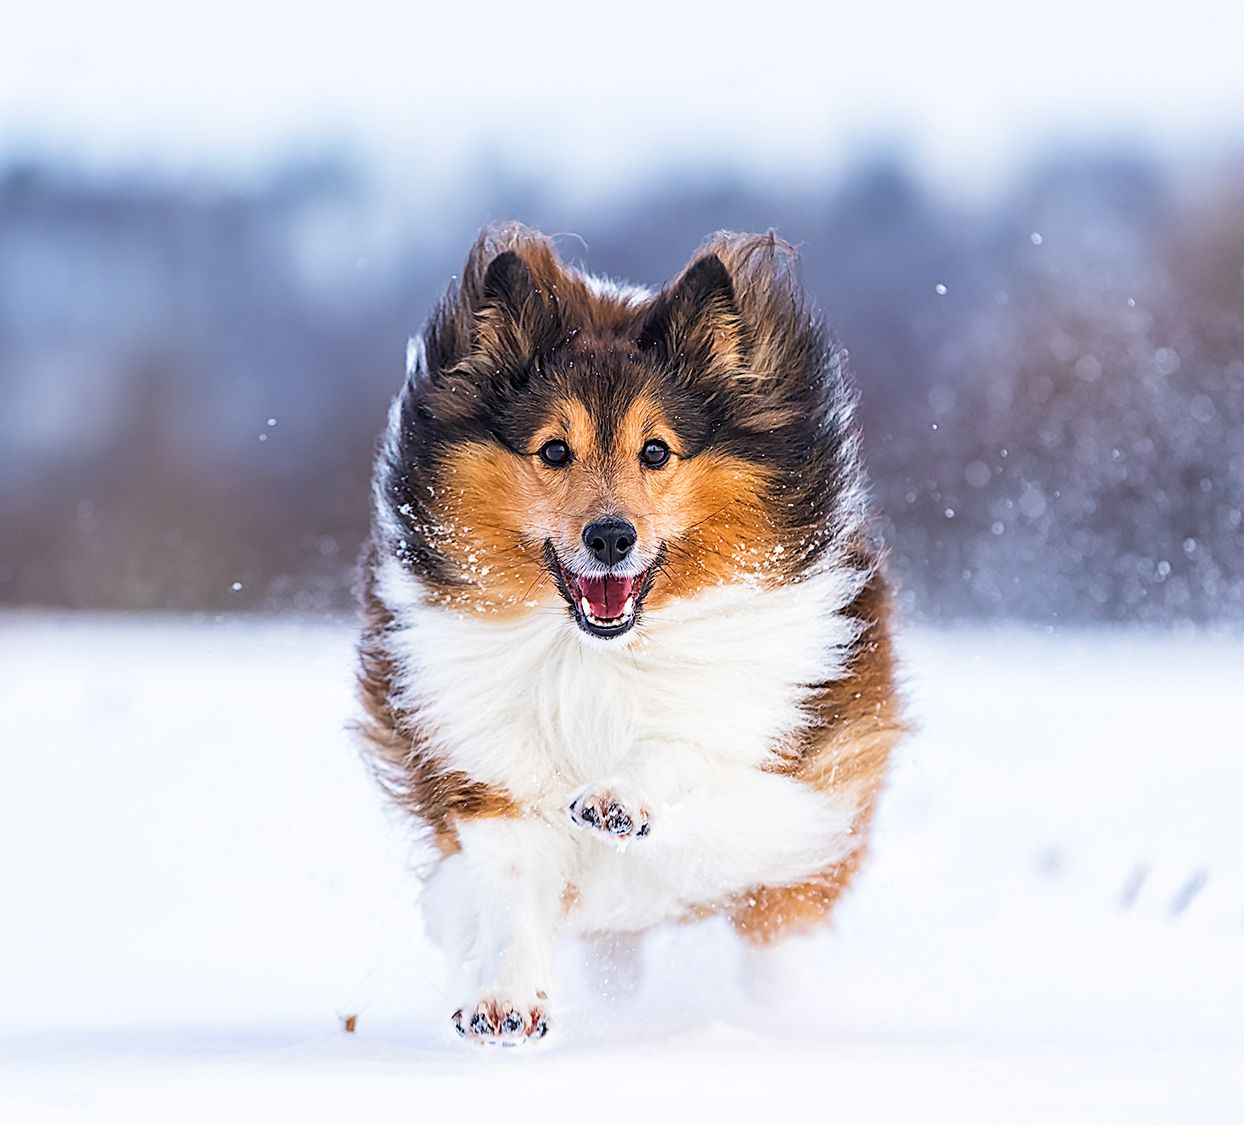 shetland sheepdog running in snow